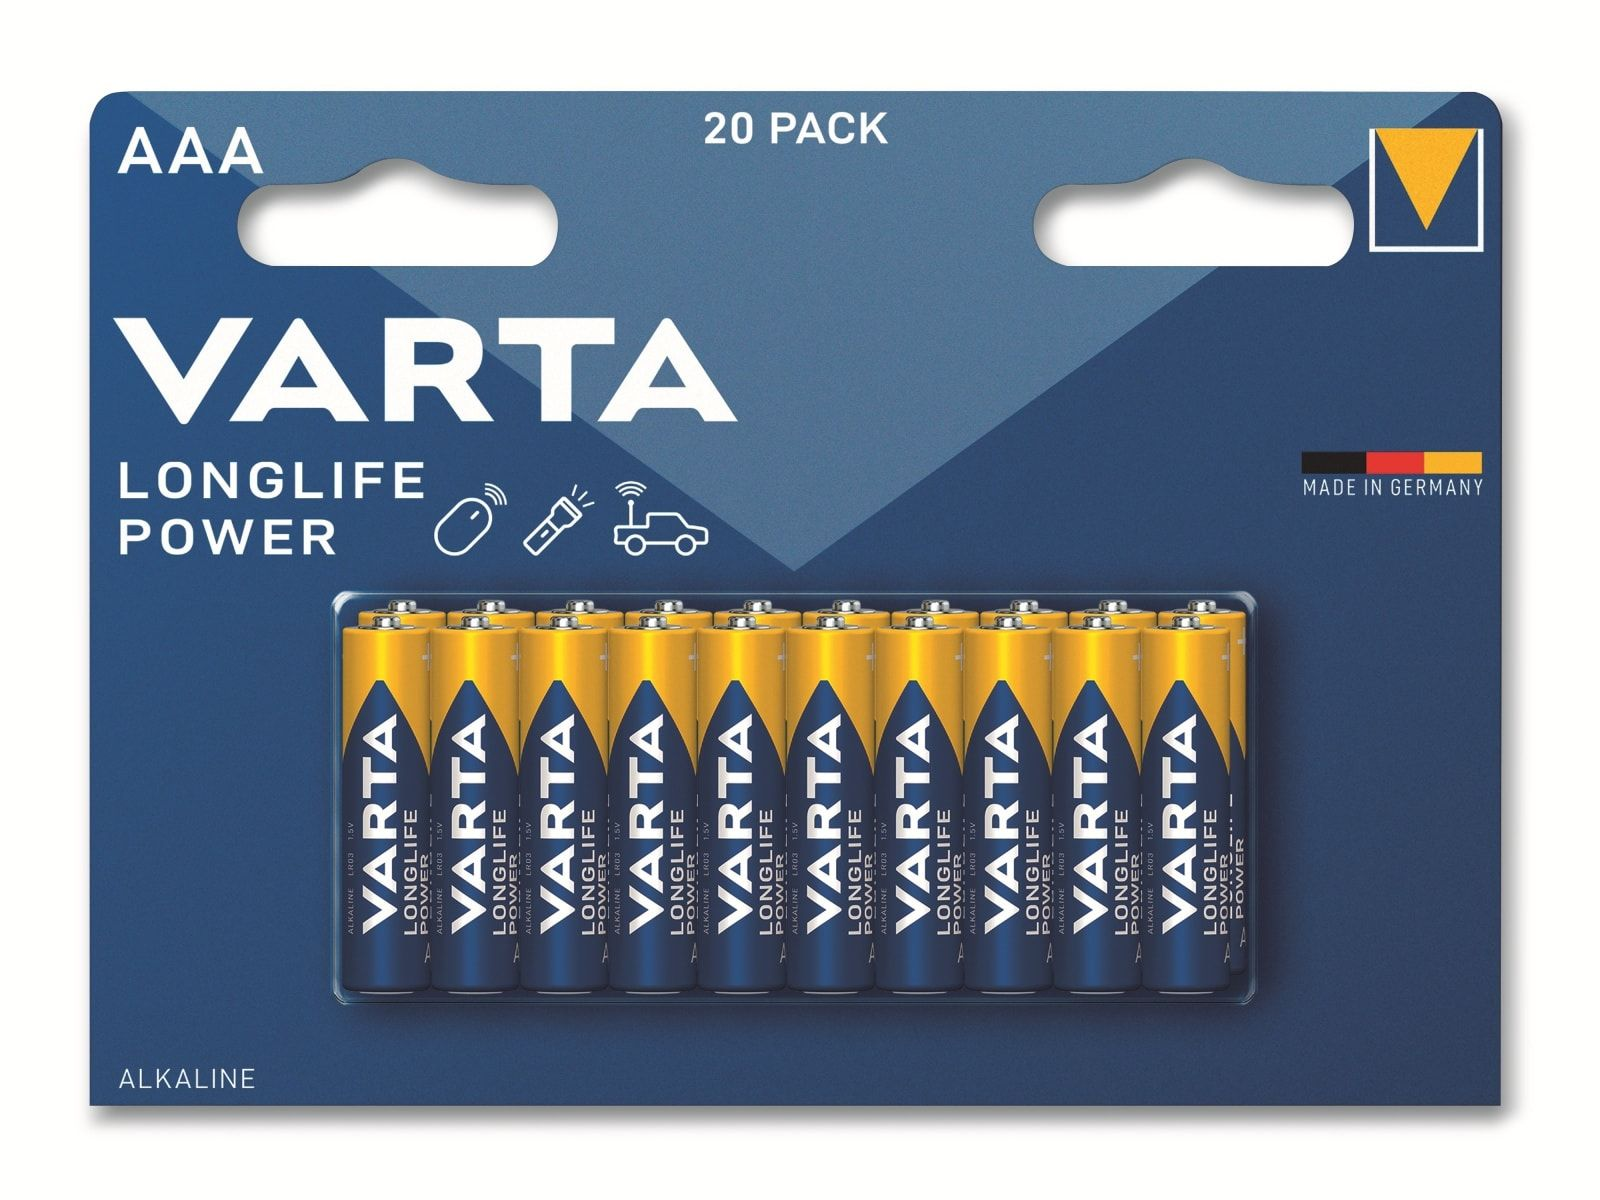 Micro, LR03, Alkaline Batterien Power, Stück 1.5V, Longlife AAA, Alkaline, VARTA Batterie 20